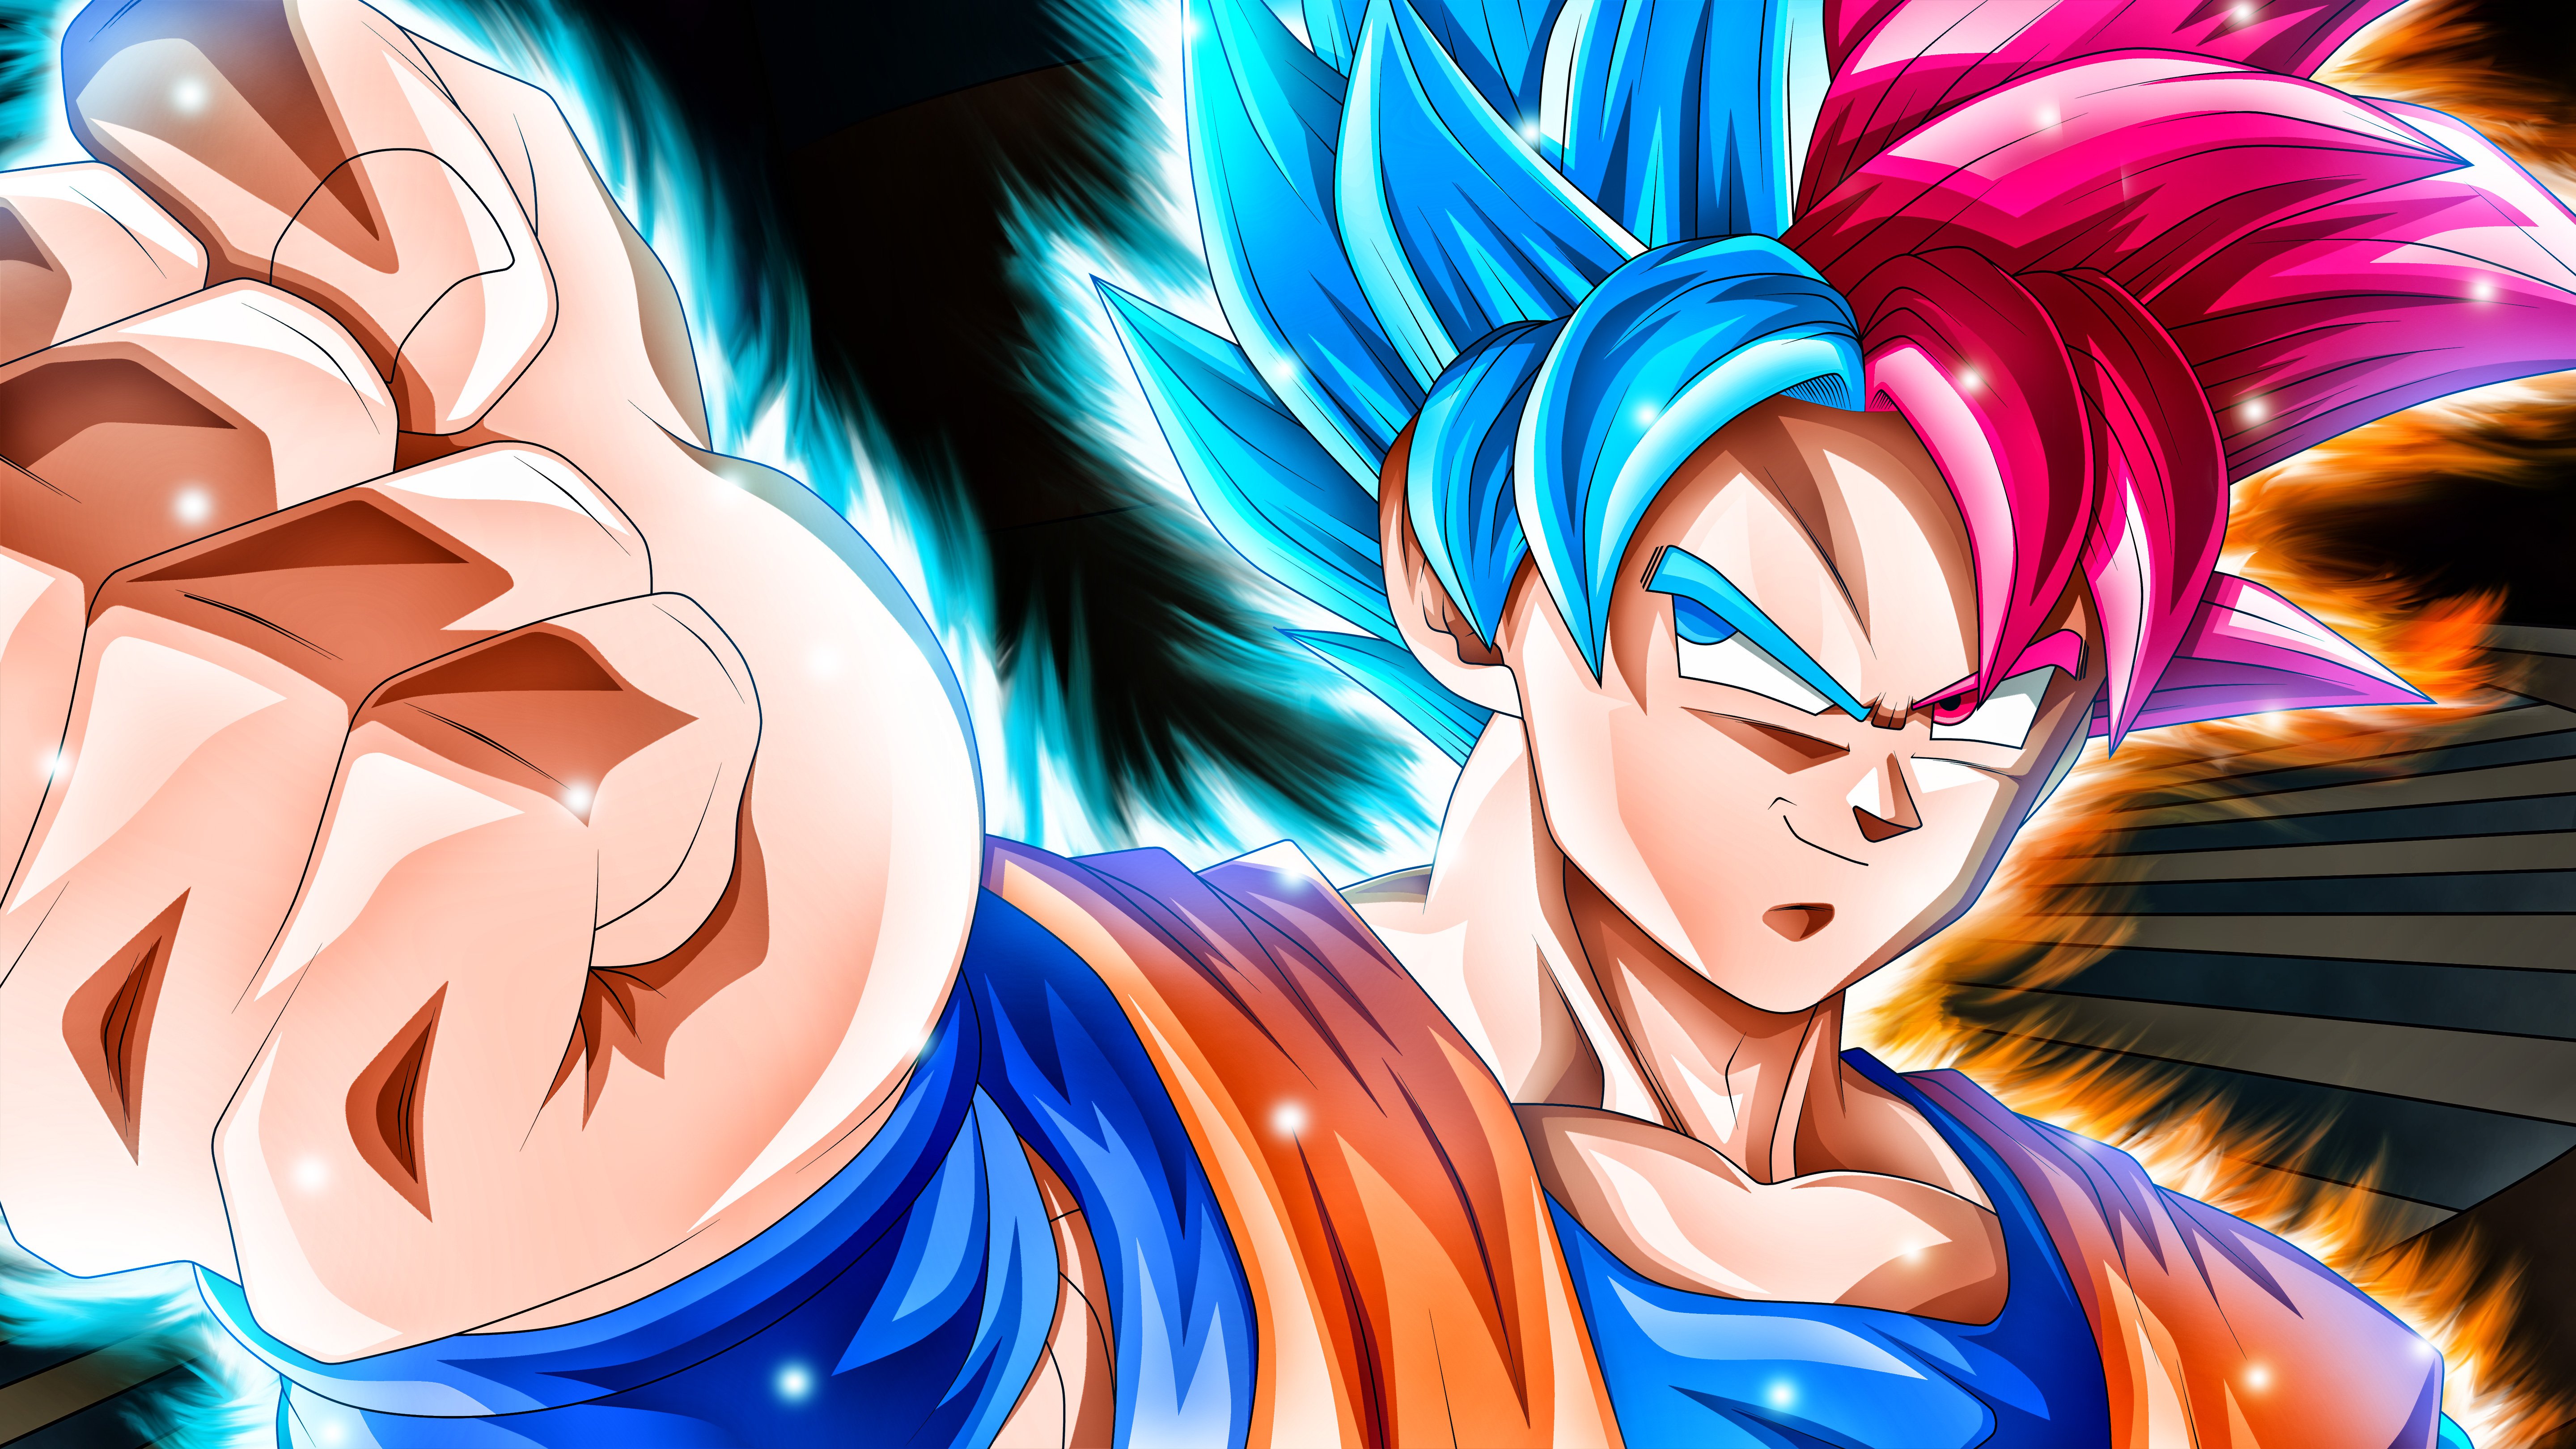 Fondos de pantalla Anime Goku Super Saiyan Blue and Black Goku SSR Dragon Ball Super